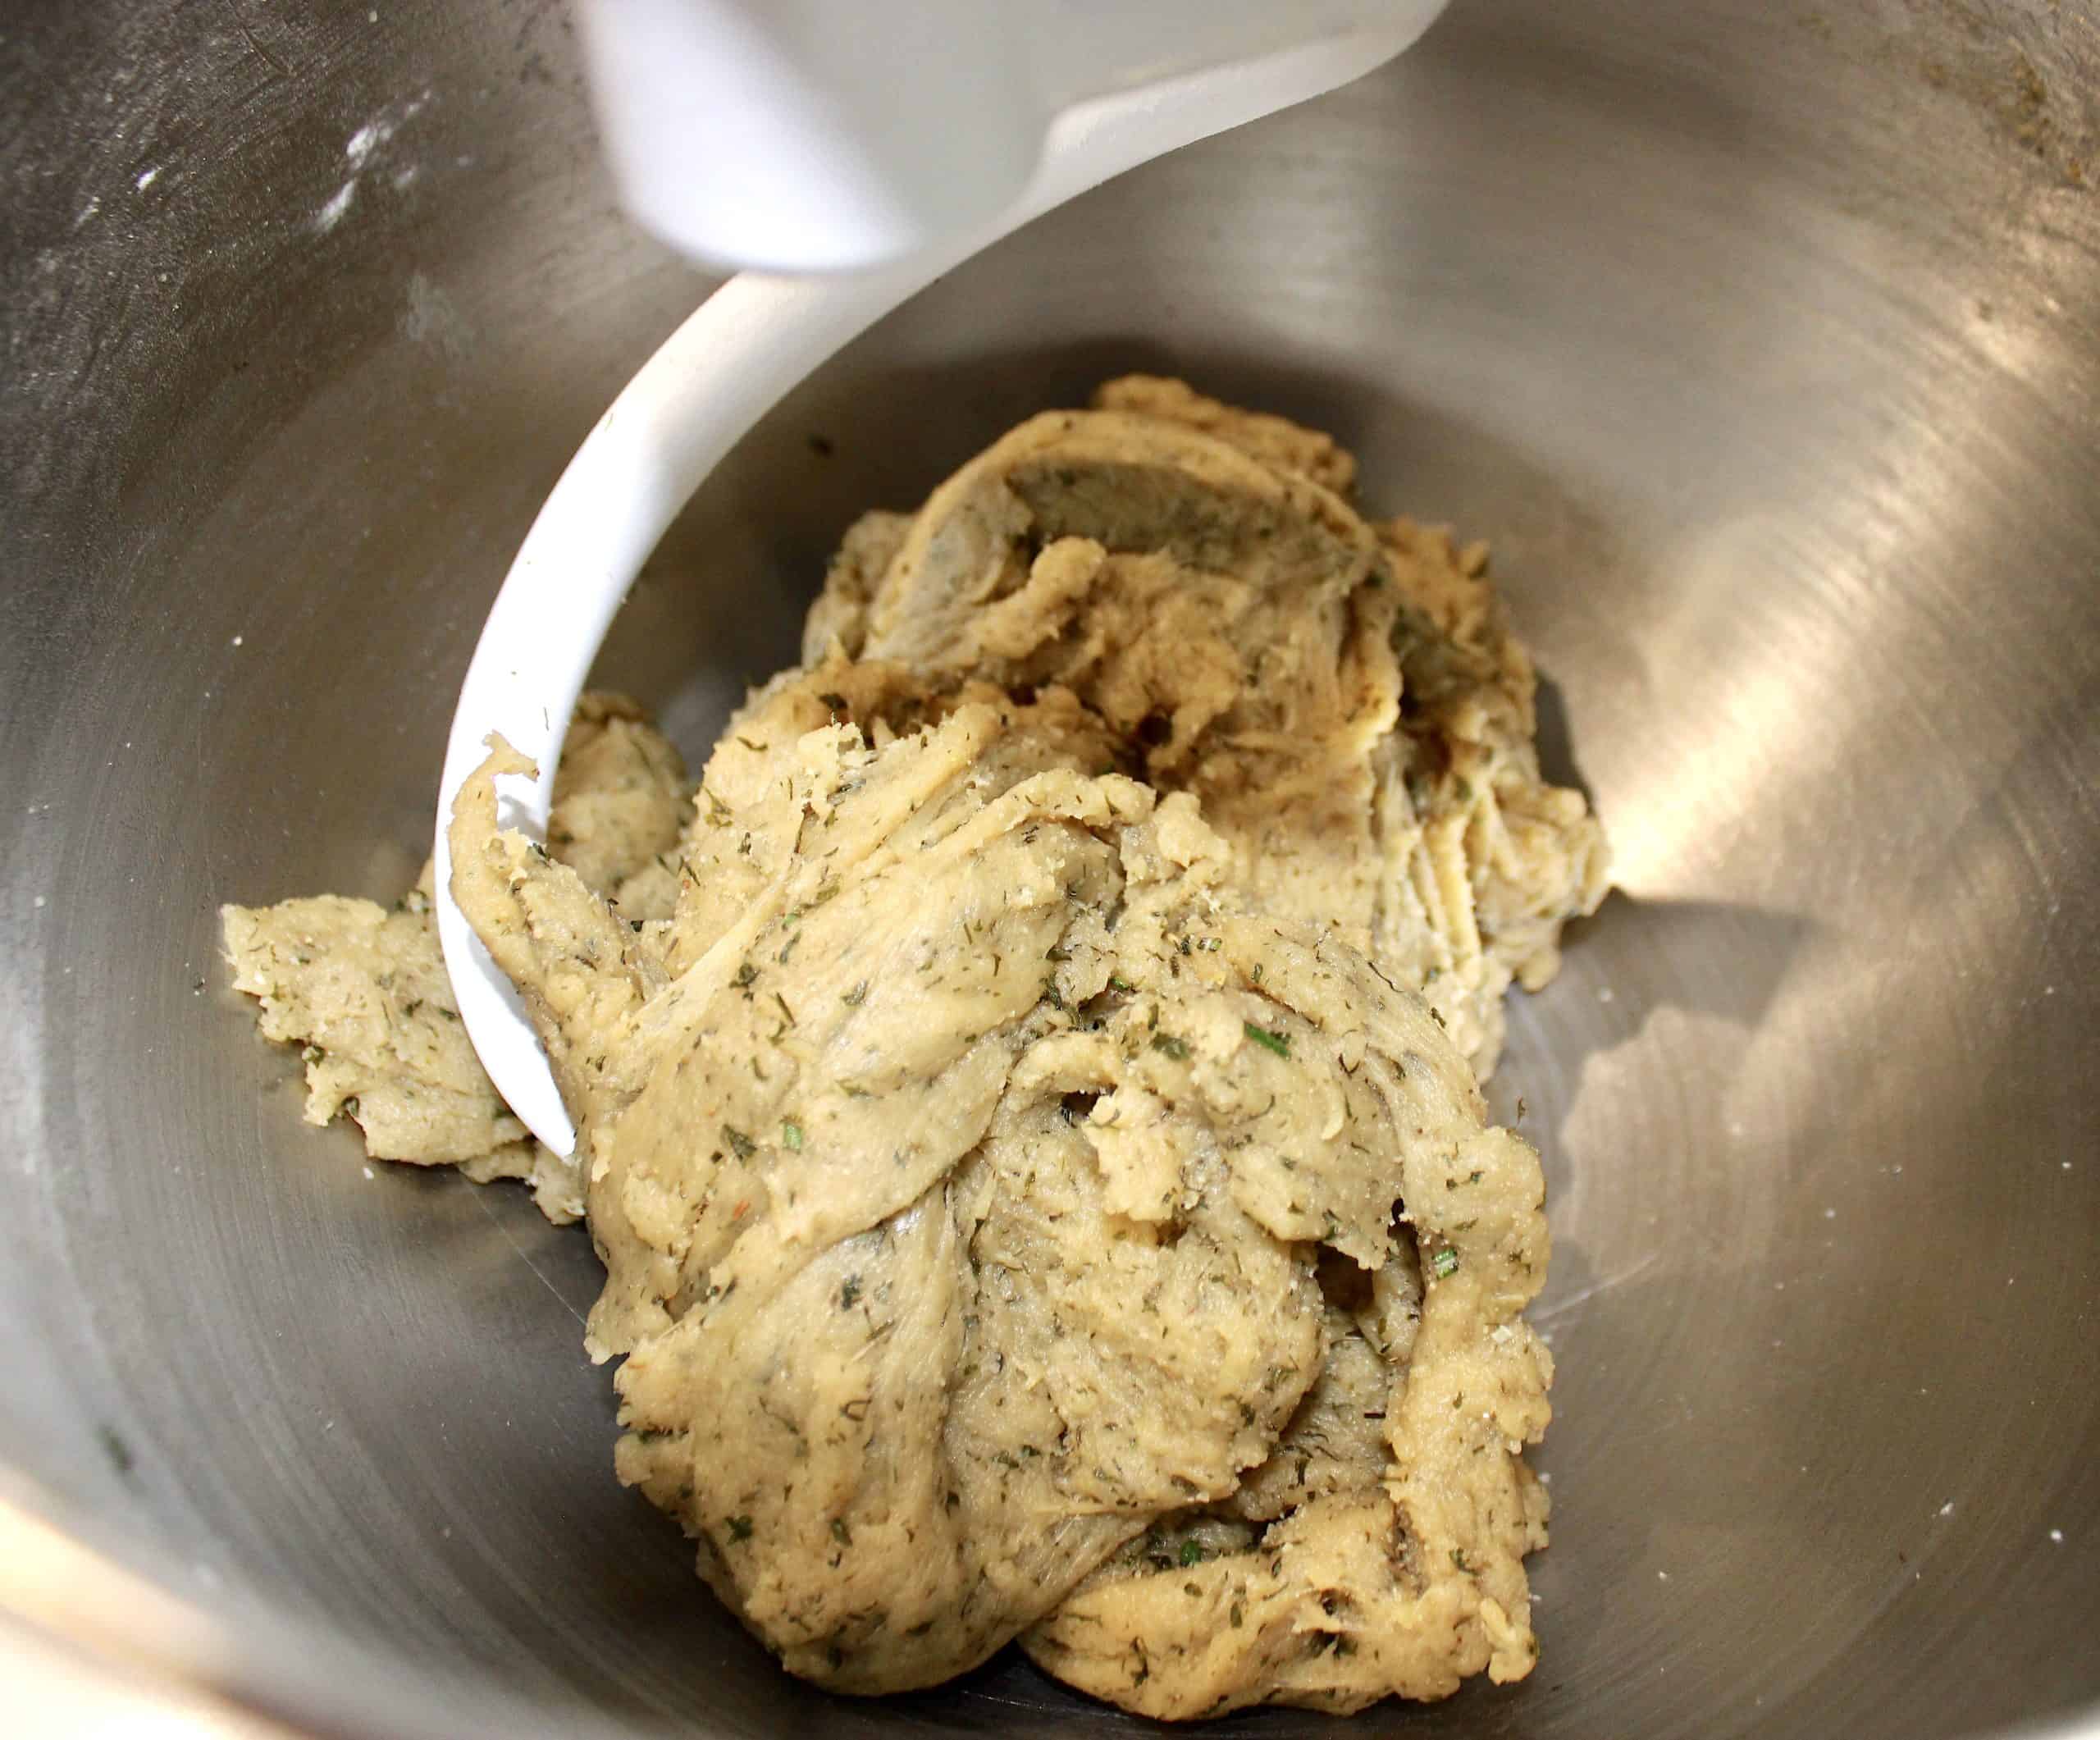 Keto Braided Herb Bread dough in mixer